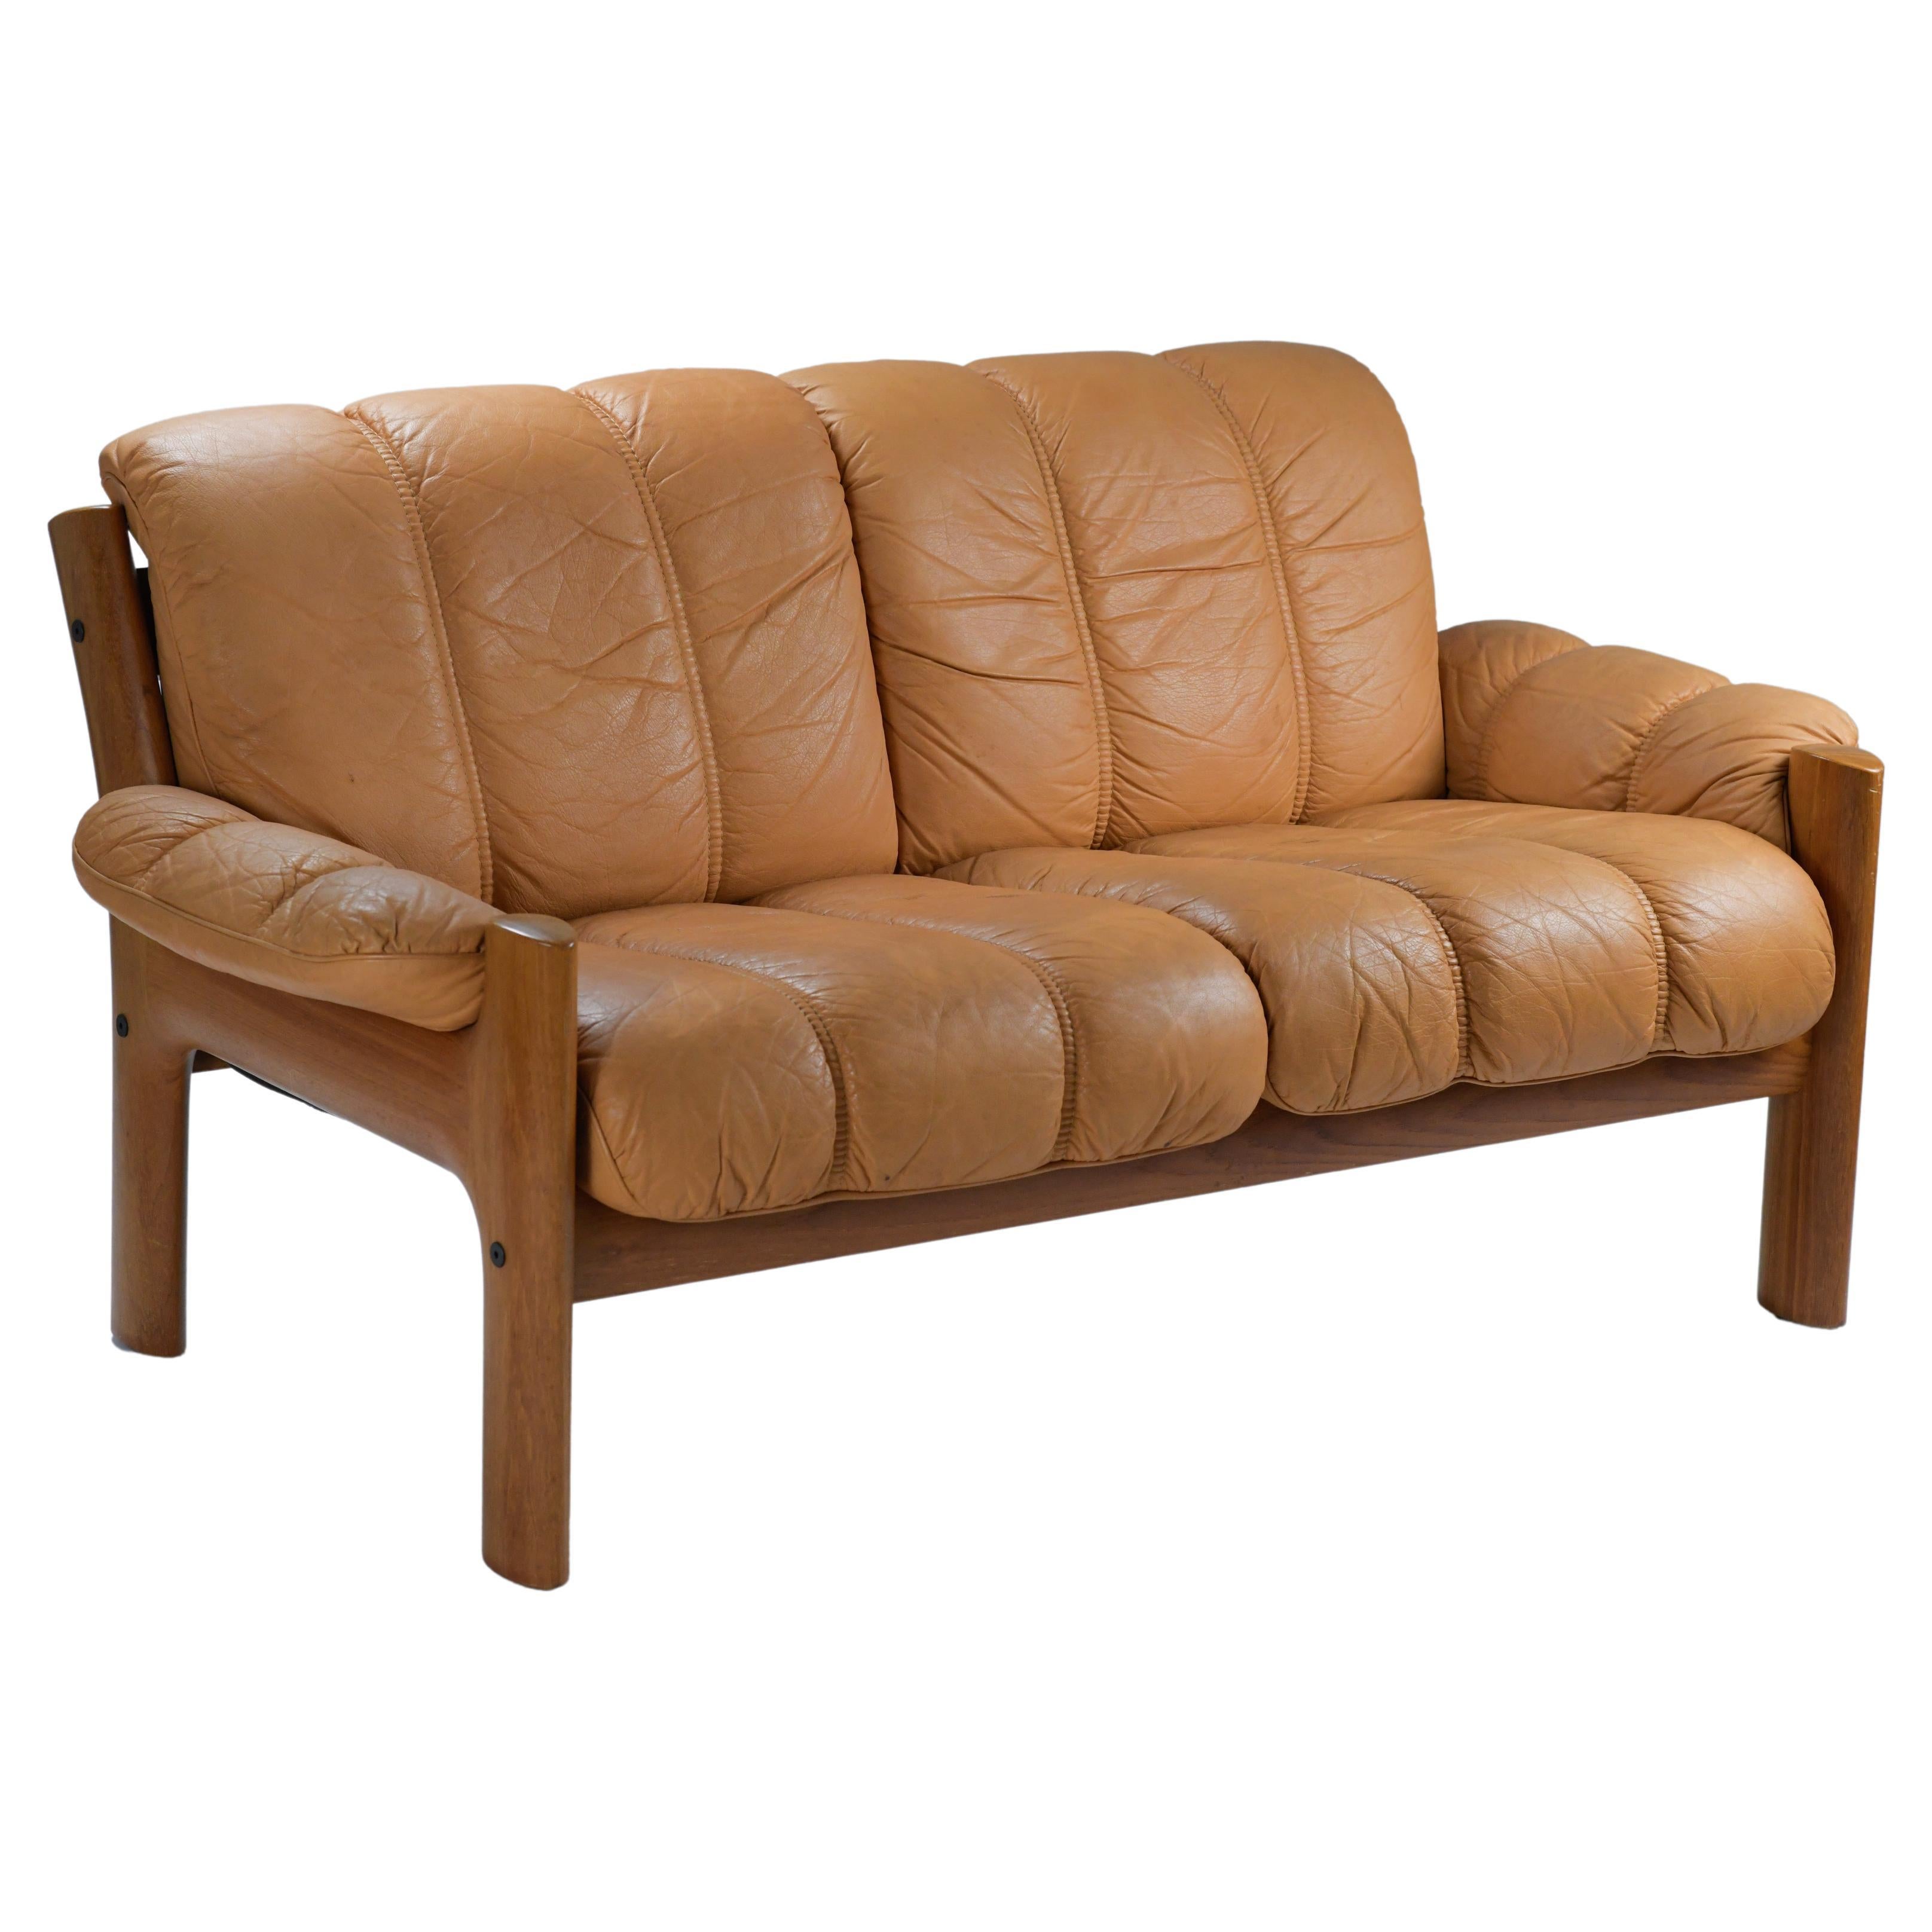 1970s Orange Leather Loveseat Sofa by Ekornes 